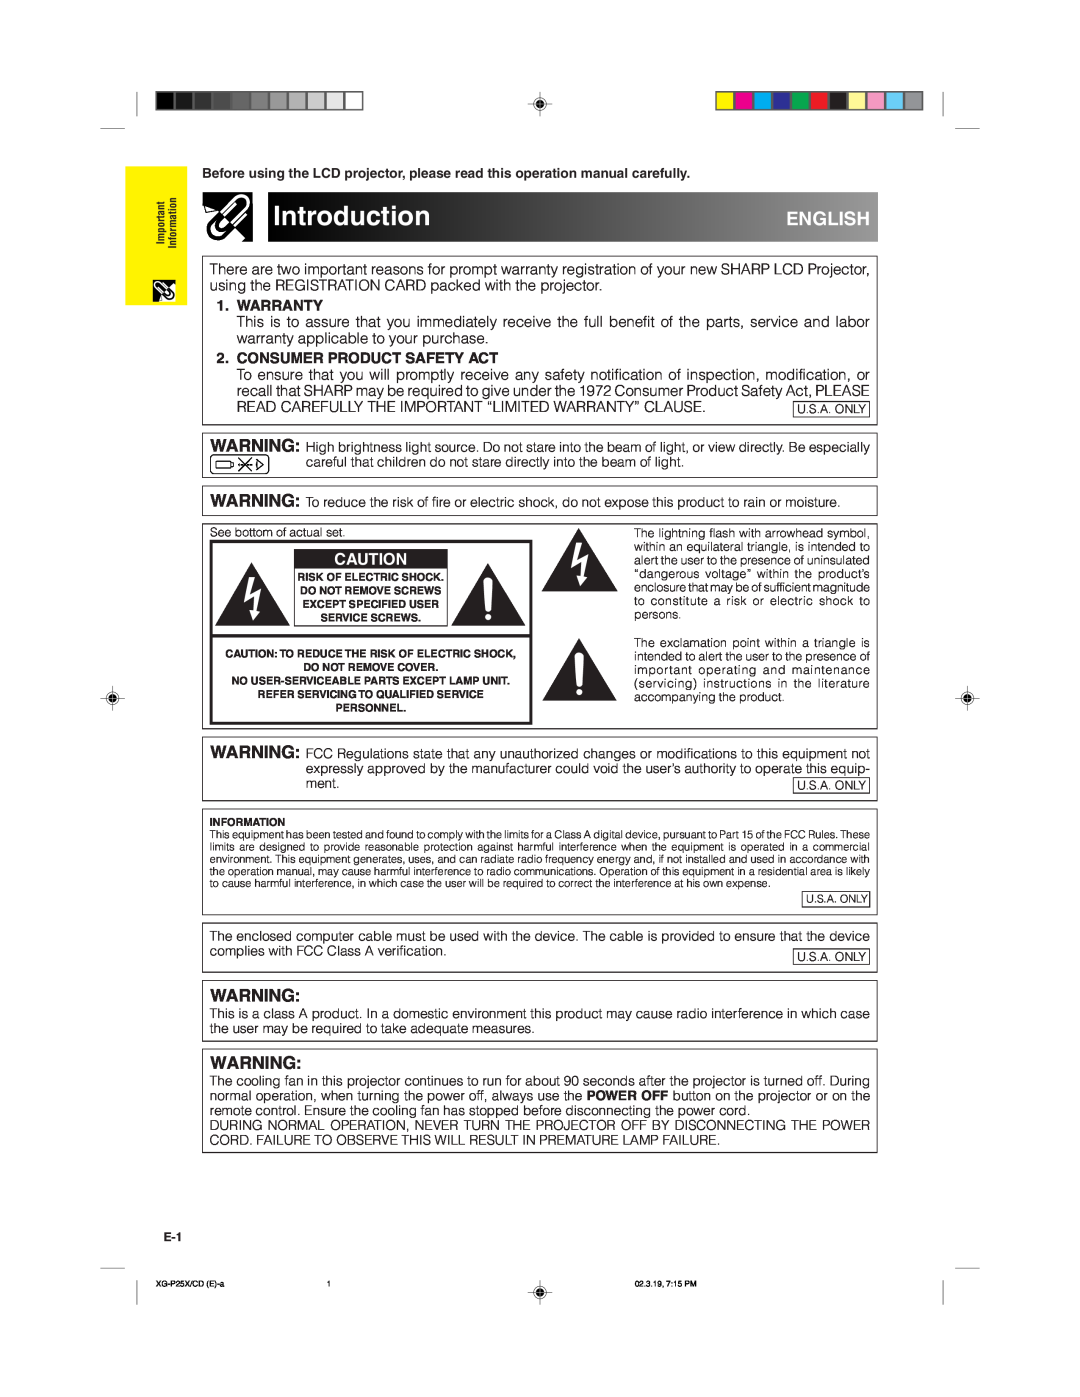 Sharp XG-P25X operation manual Introduction, English, Warranty, Consumer Product Safety Act 